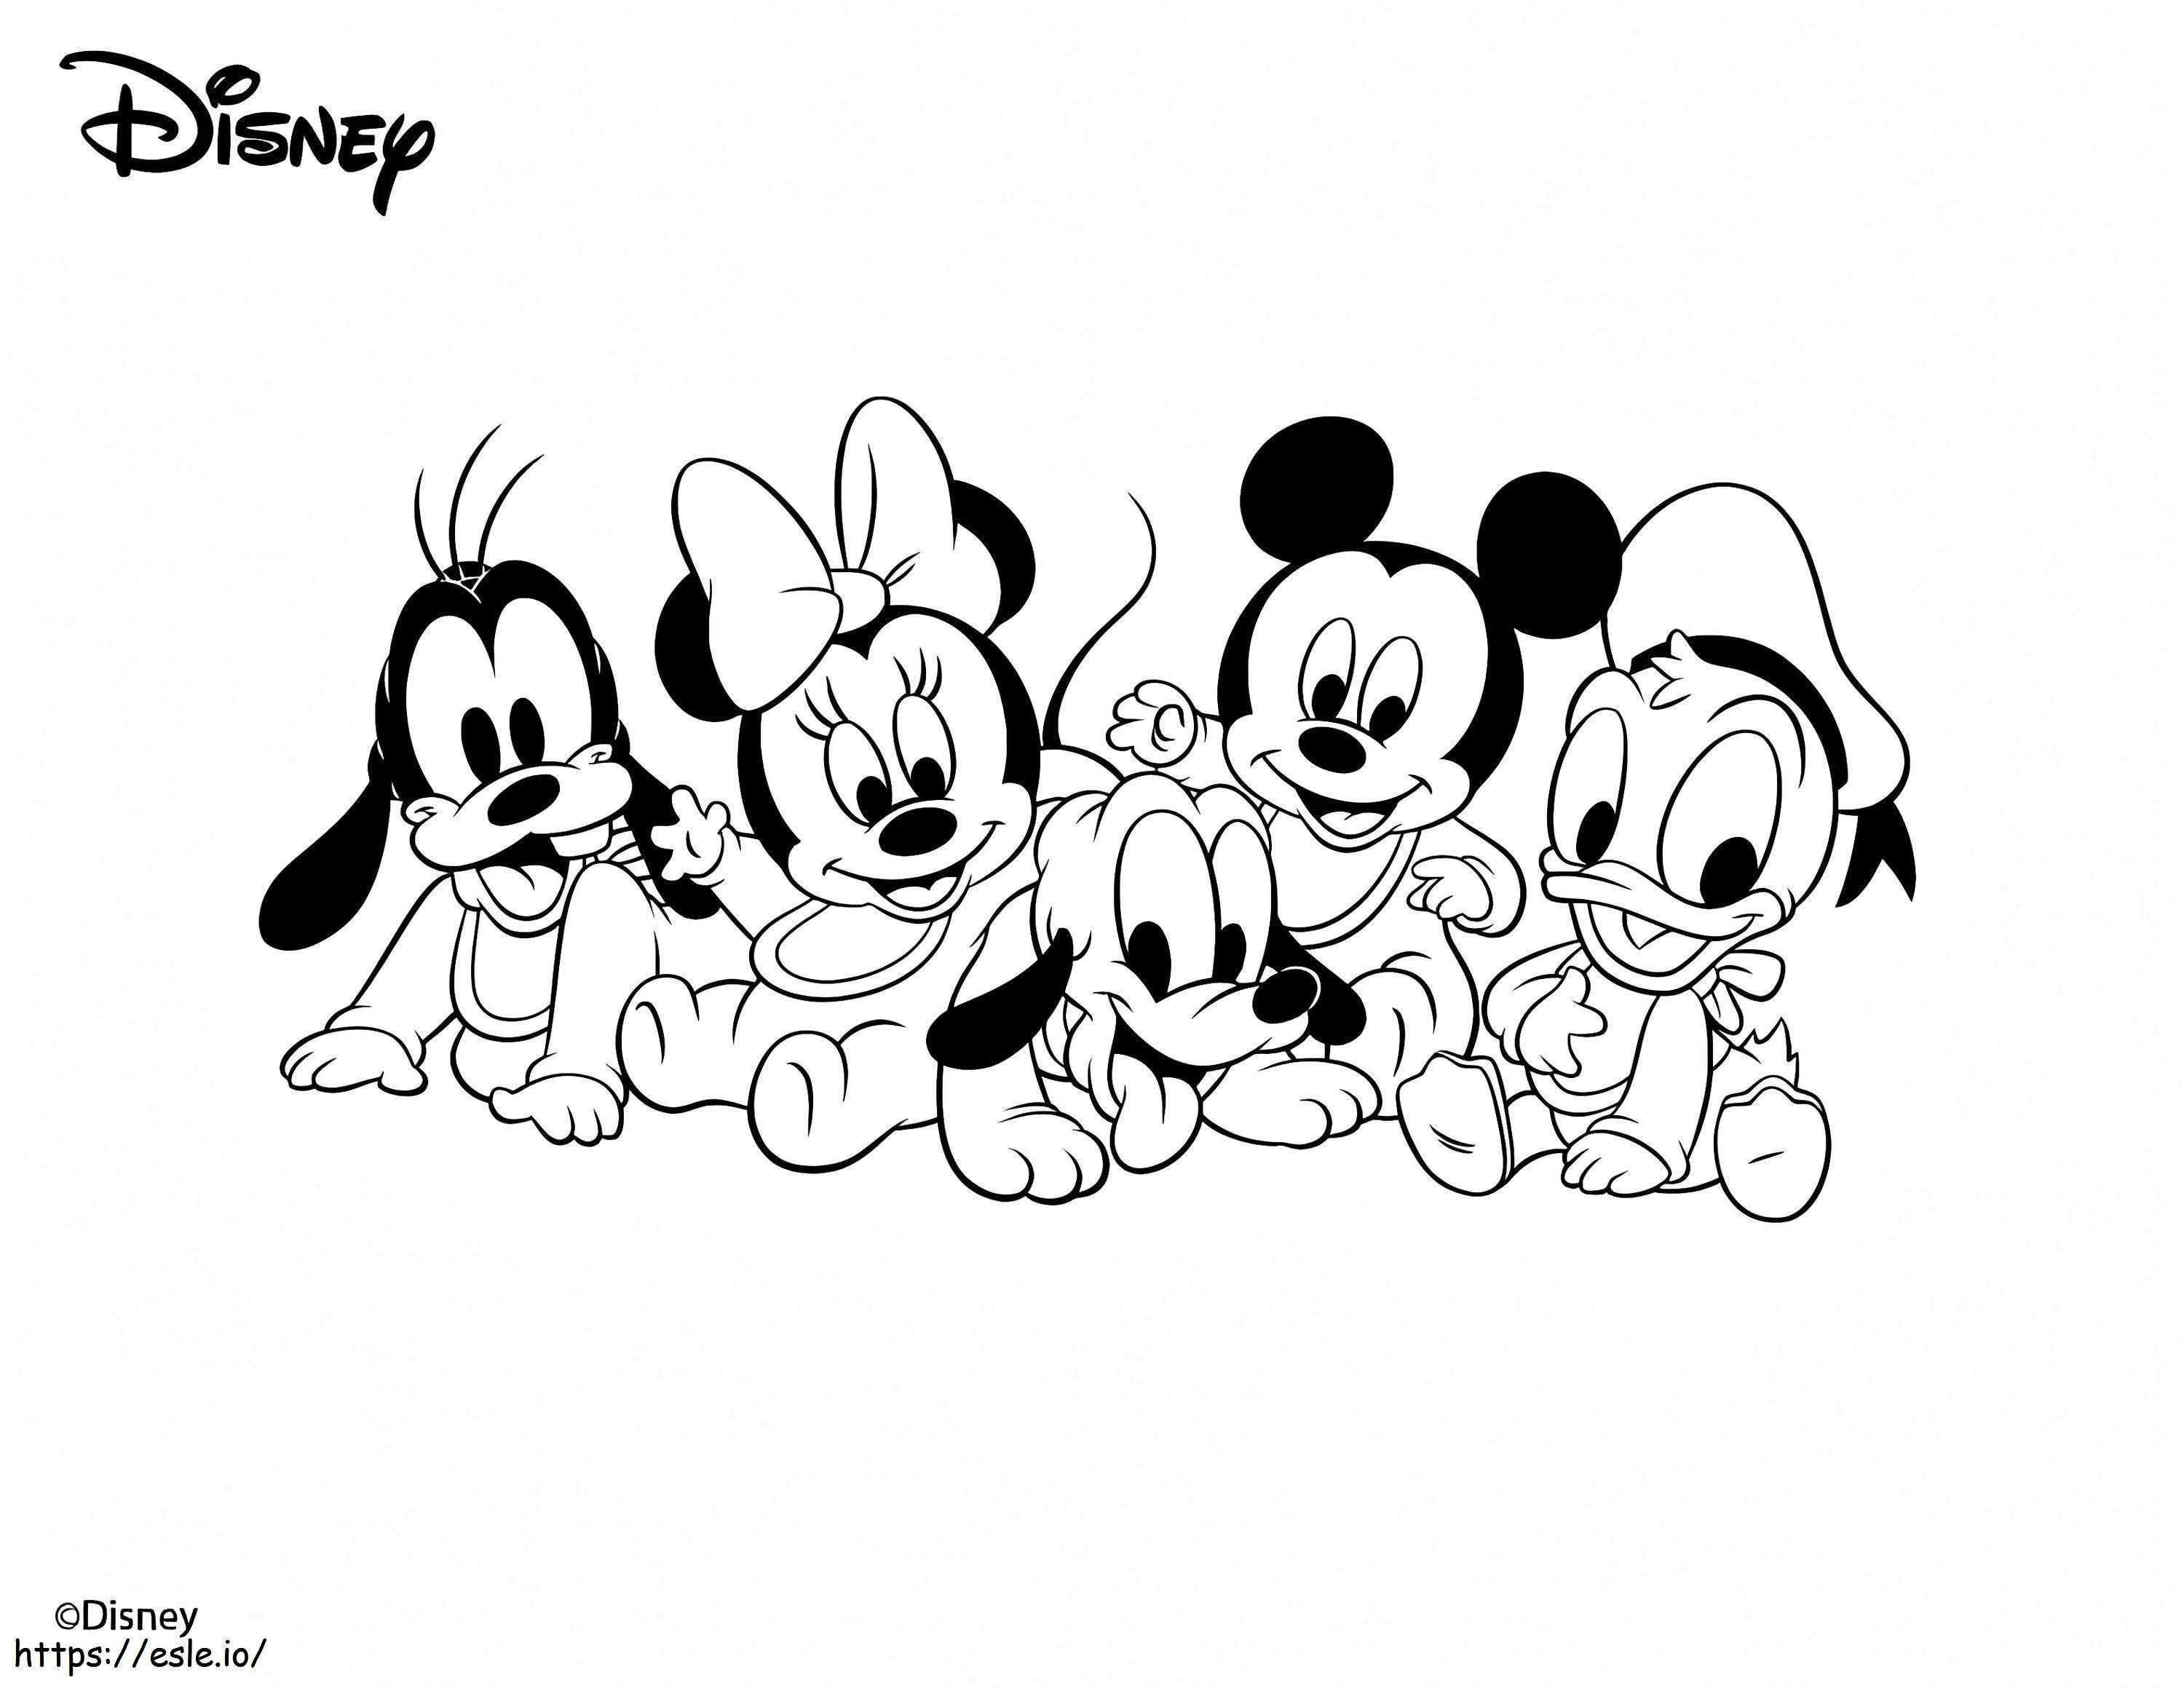 Adorable Disney Babies coloring page